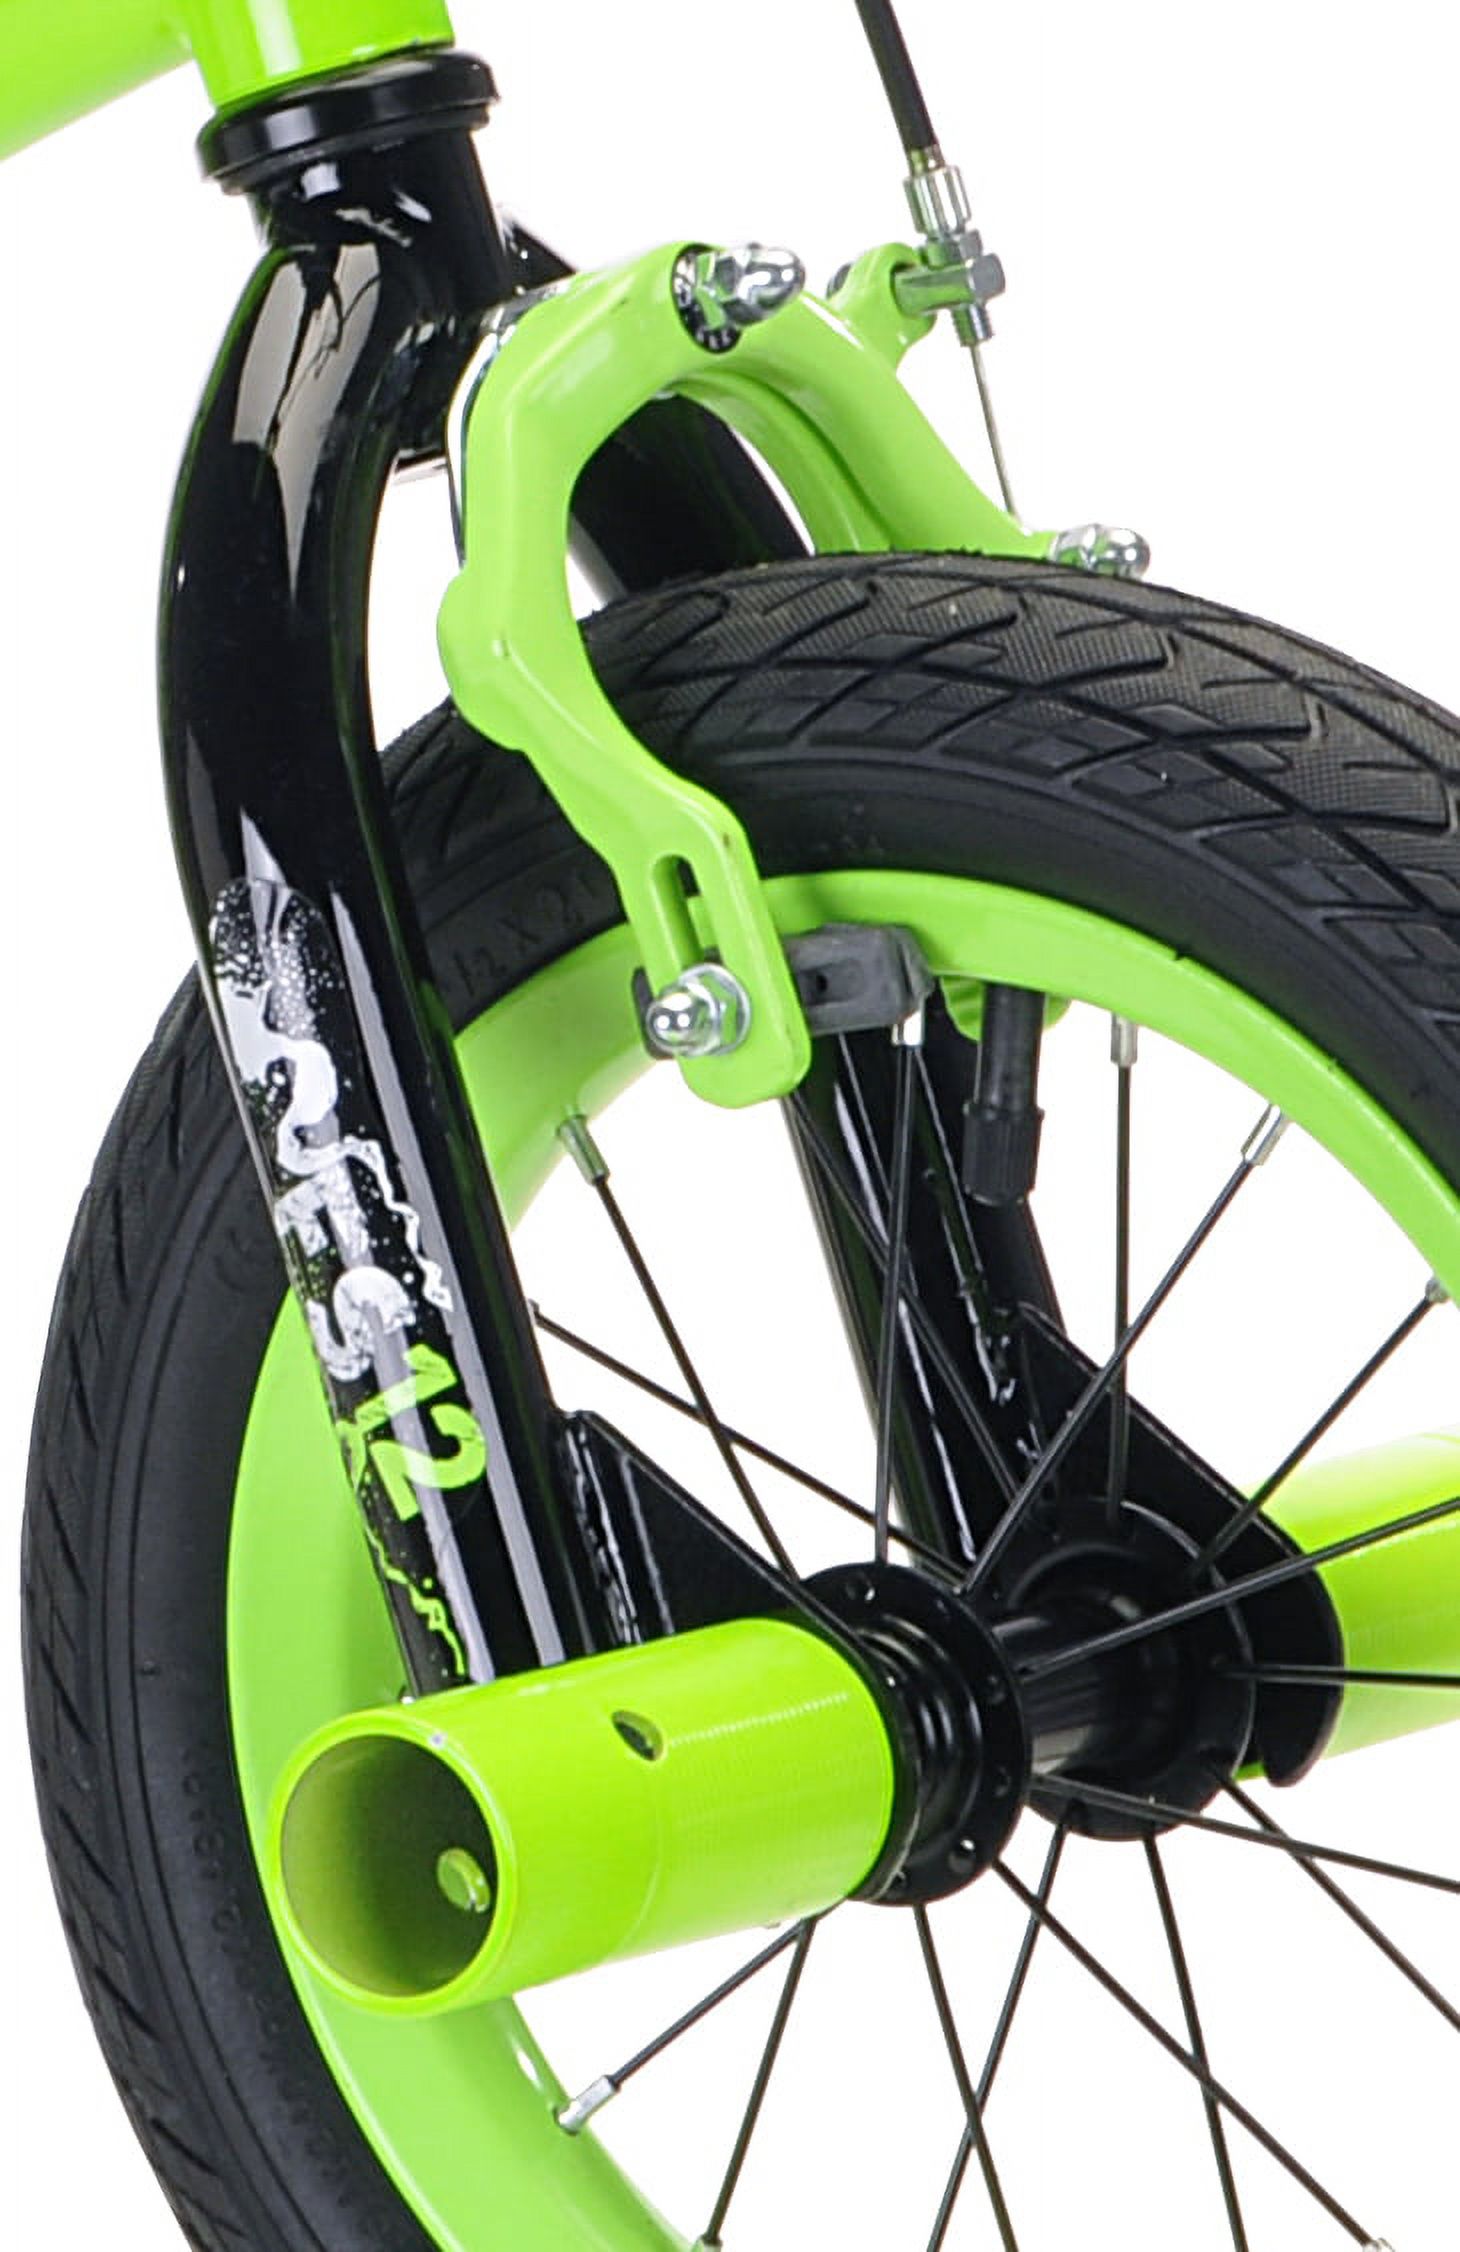 X-Games 12" BMX Boy's Bike, Green - image 4 of 8